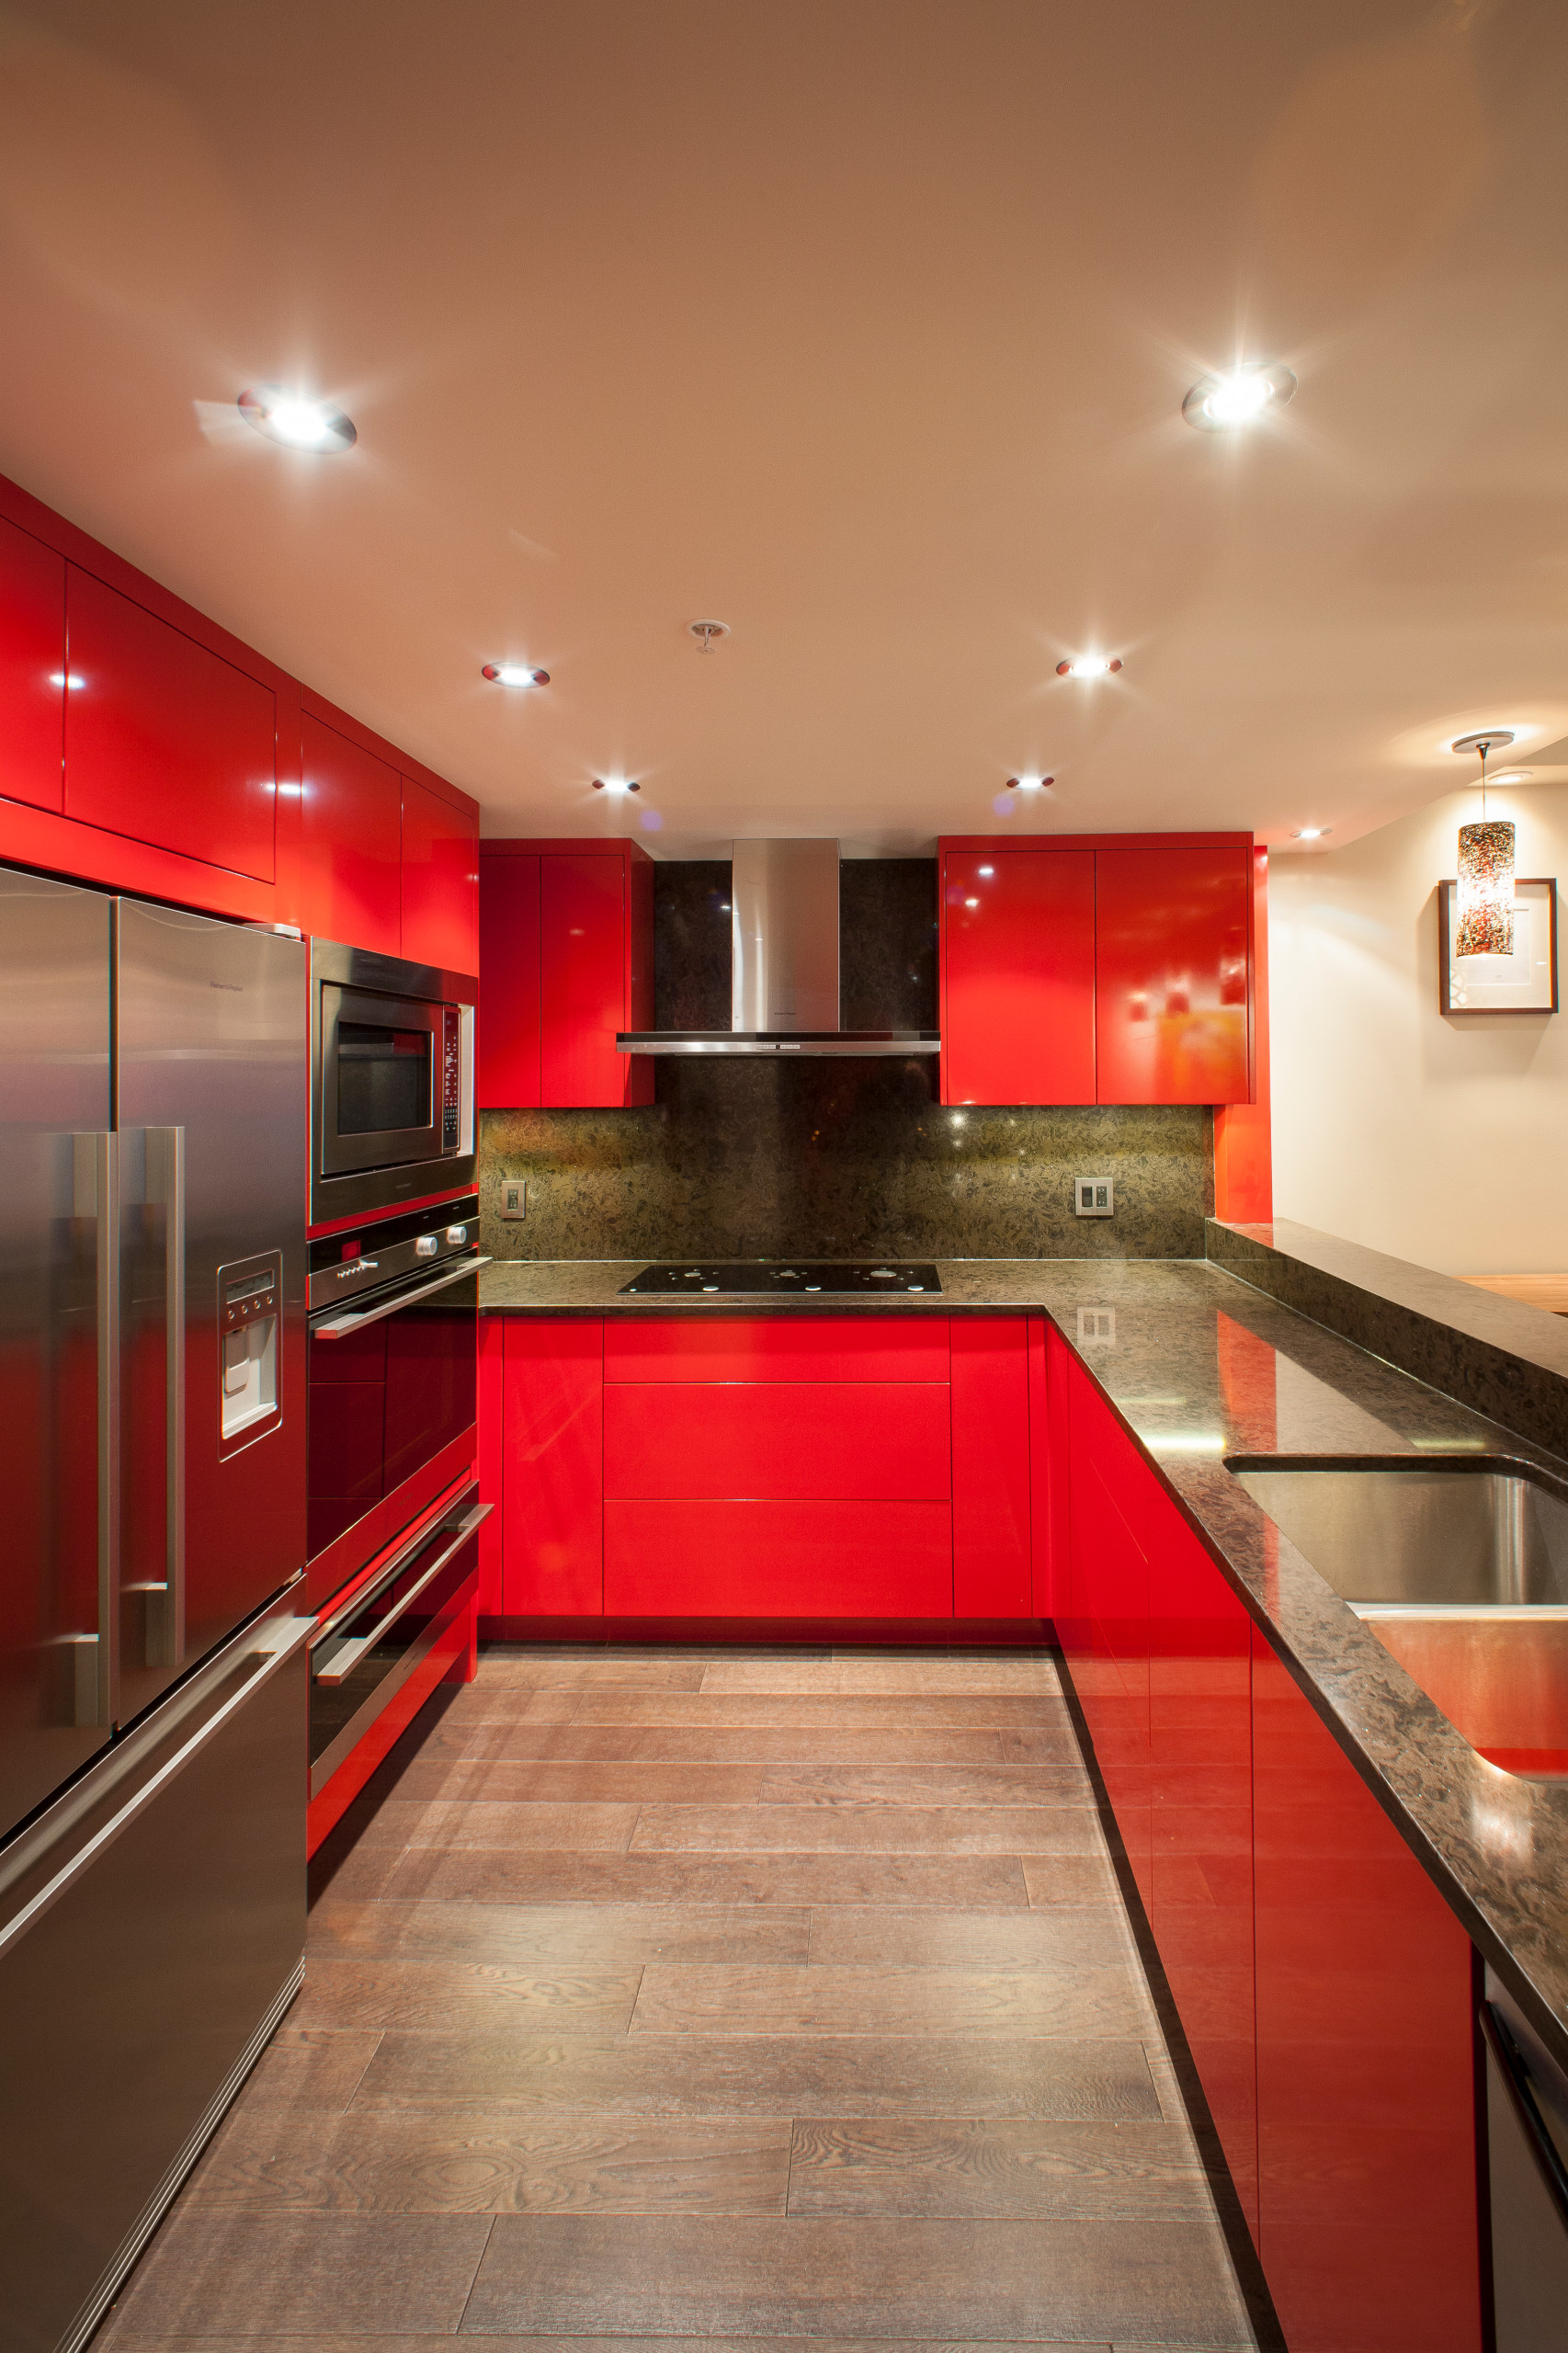 14 Red Kitchen Decor Ideas - Decorating a Red Kitchen